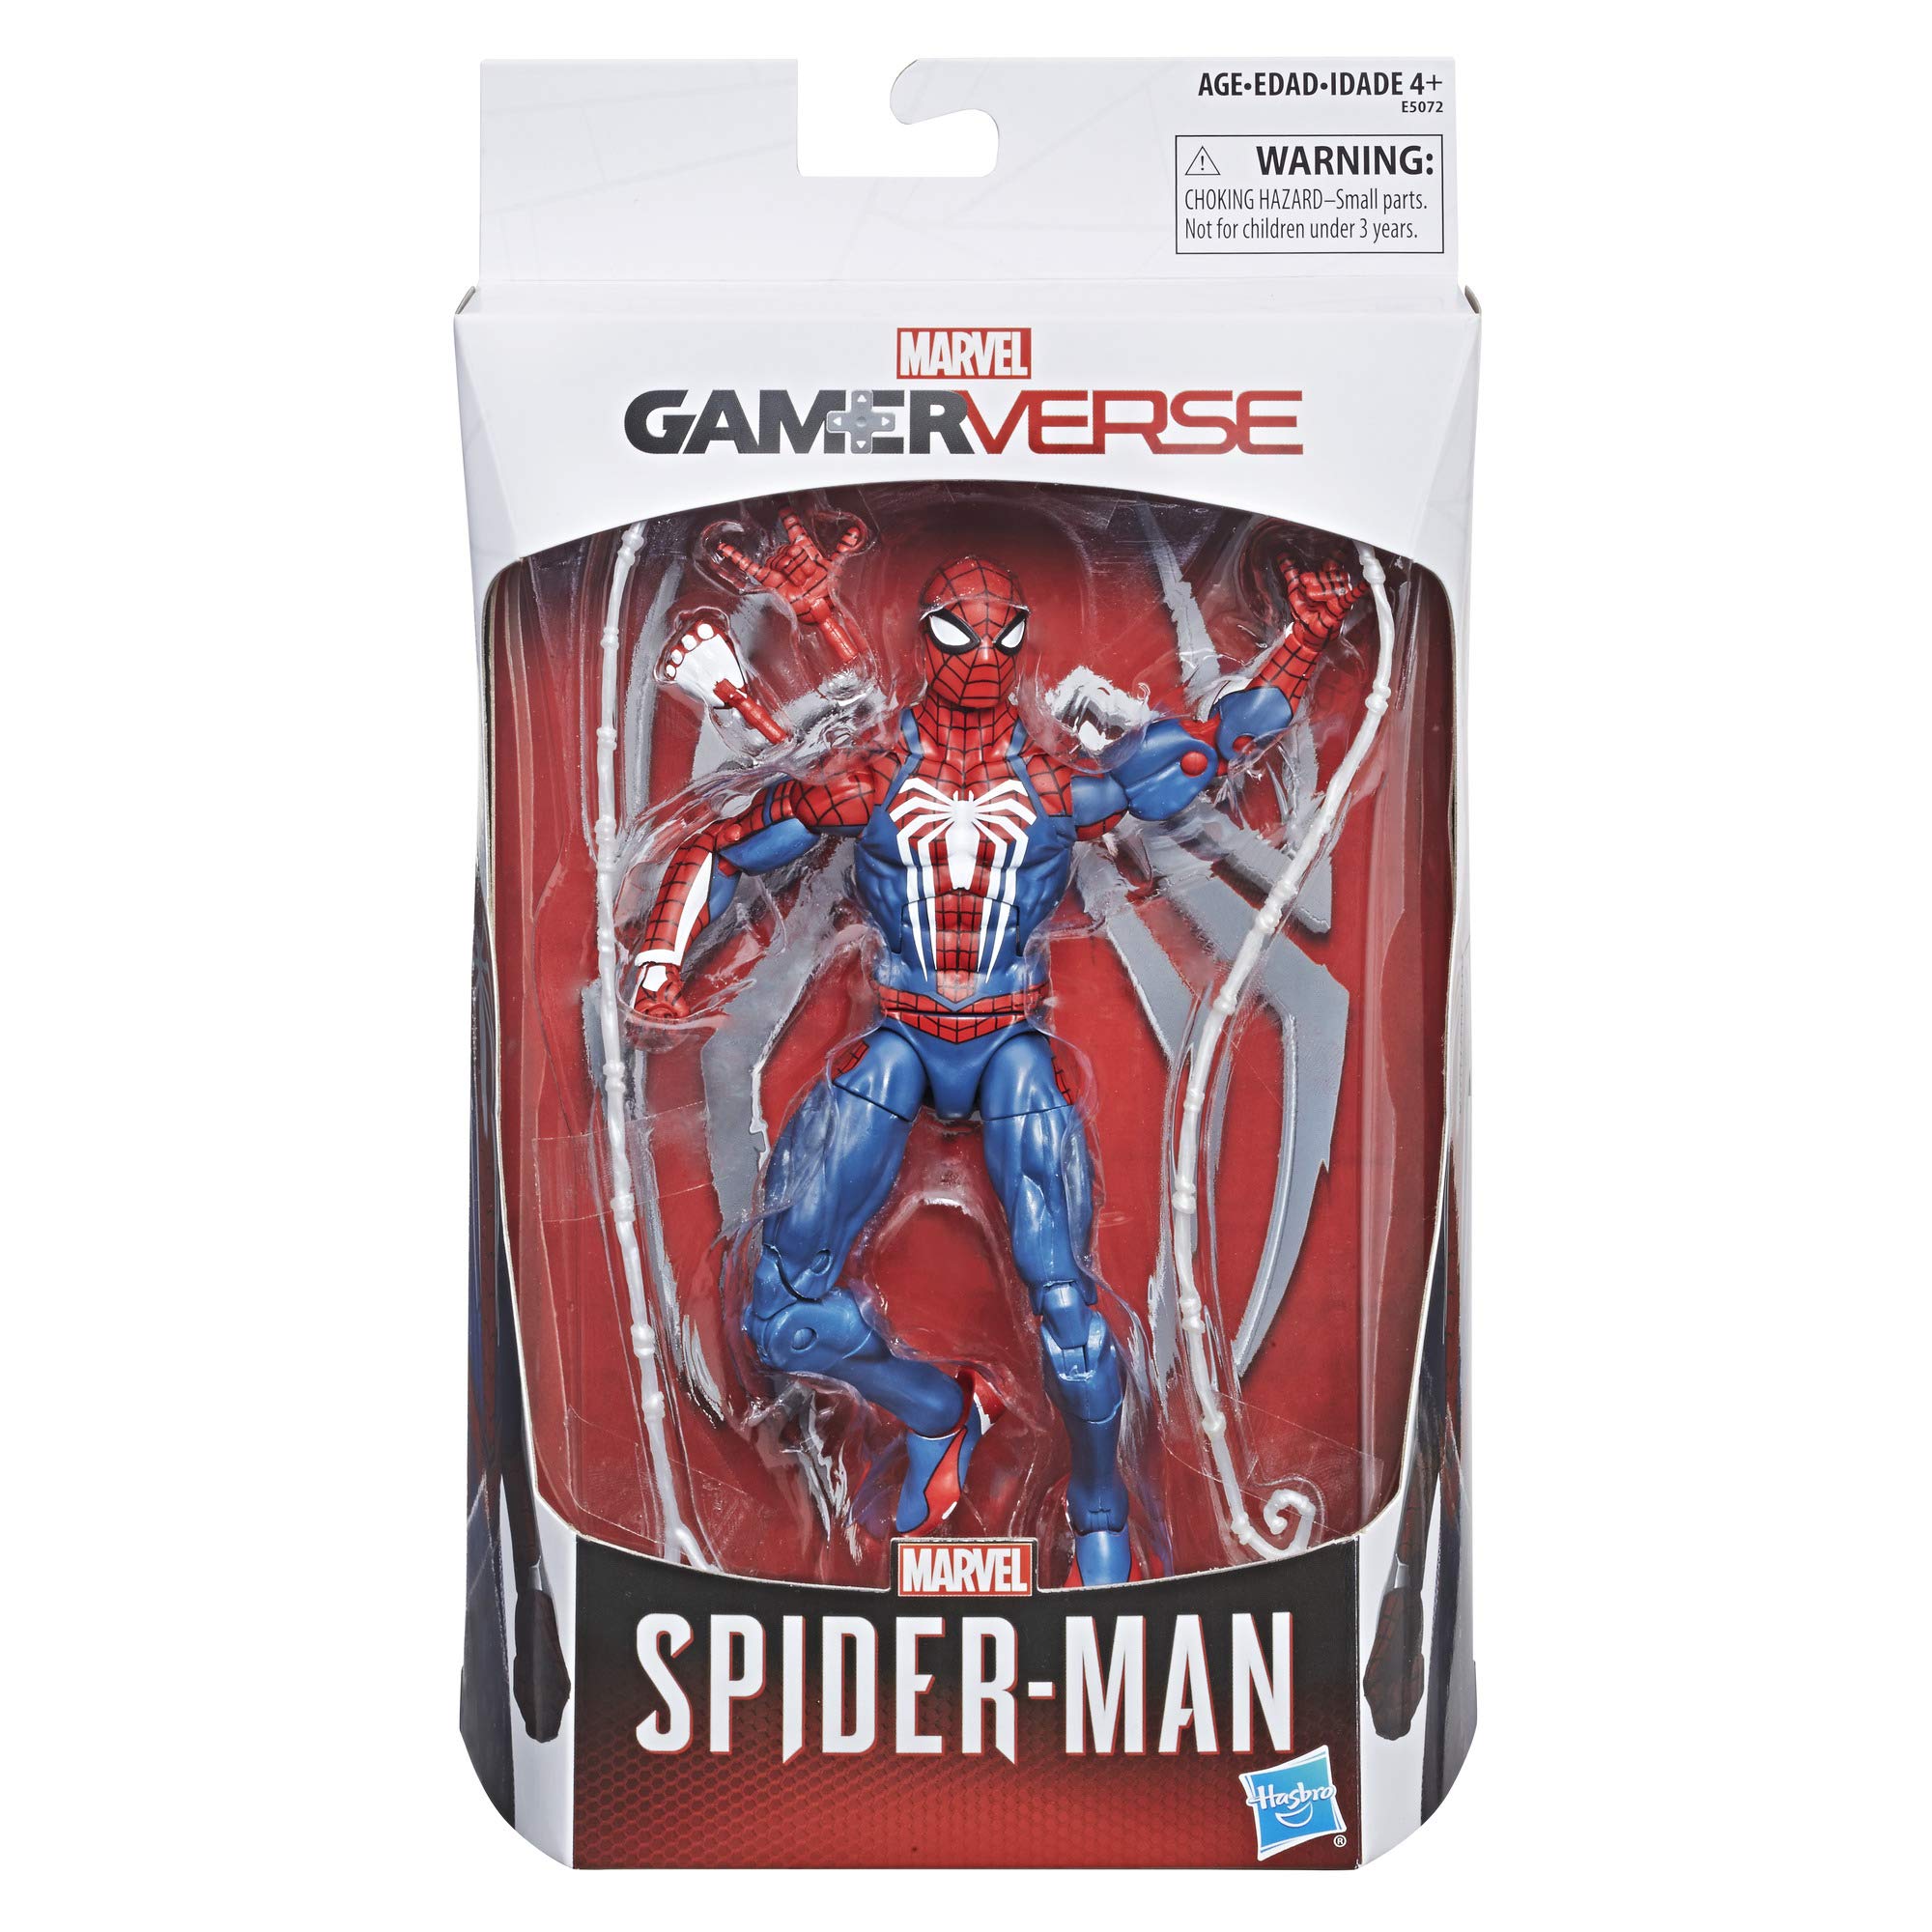 Total 35+ imagen spiderman gamerverse